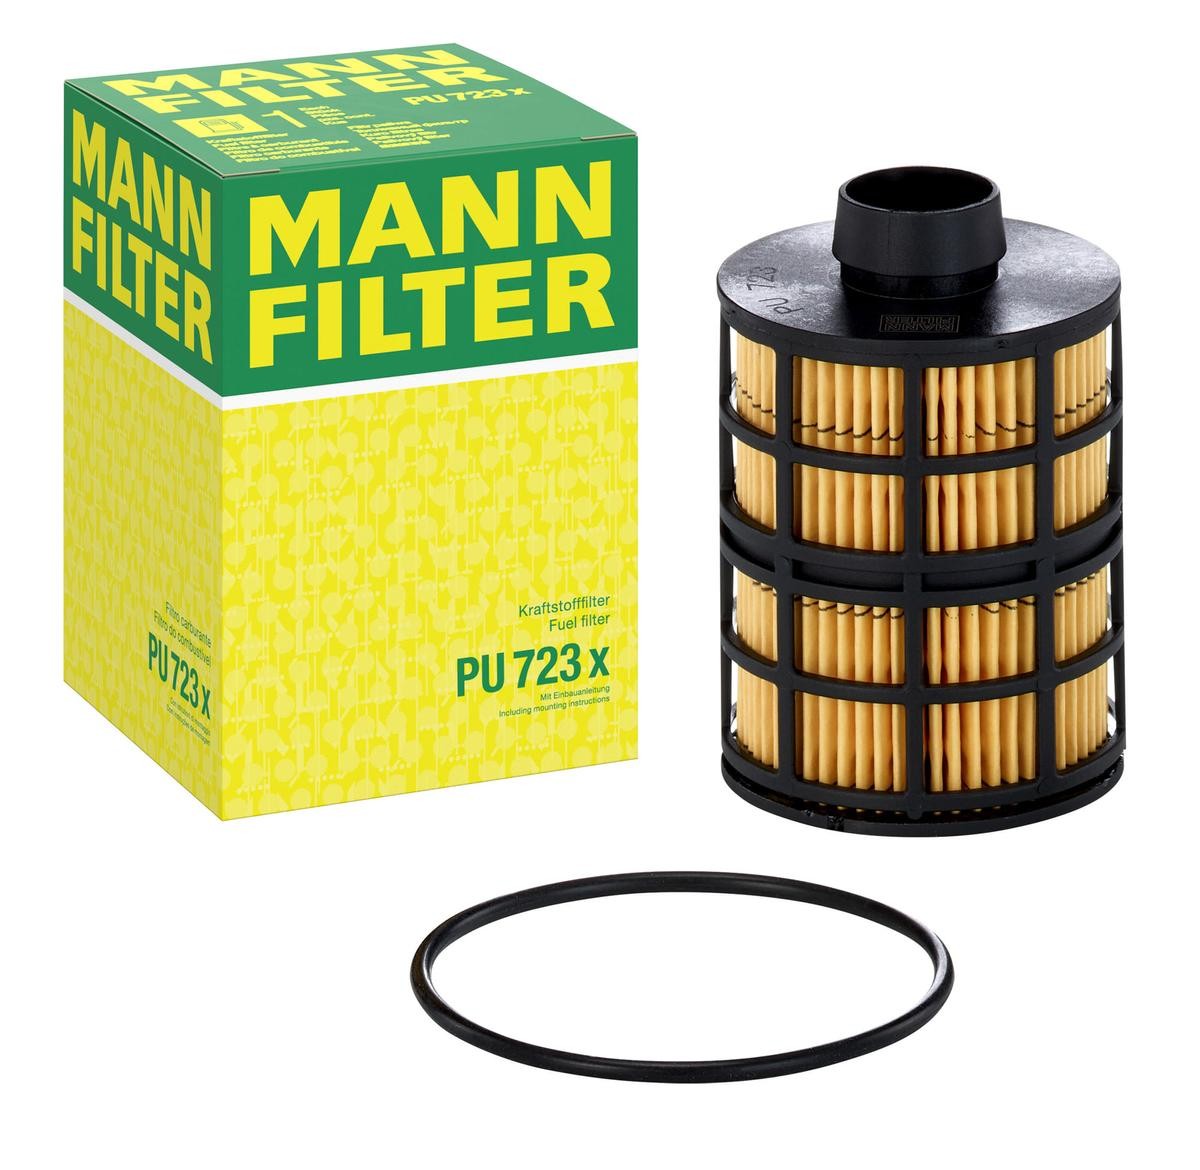 PU723x Fuel filter PU 723 x MANN-FILTER with seal